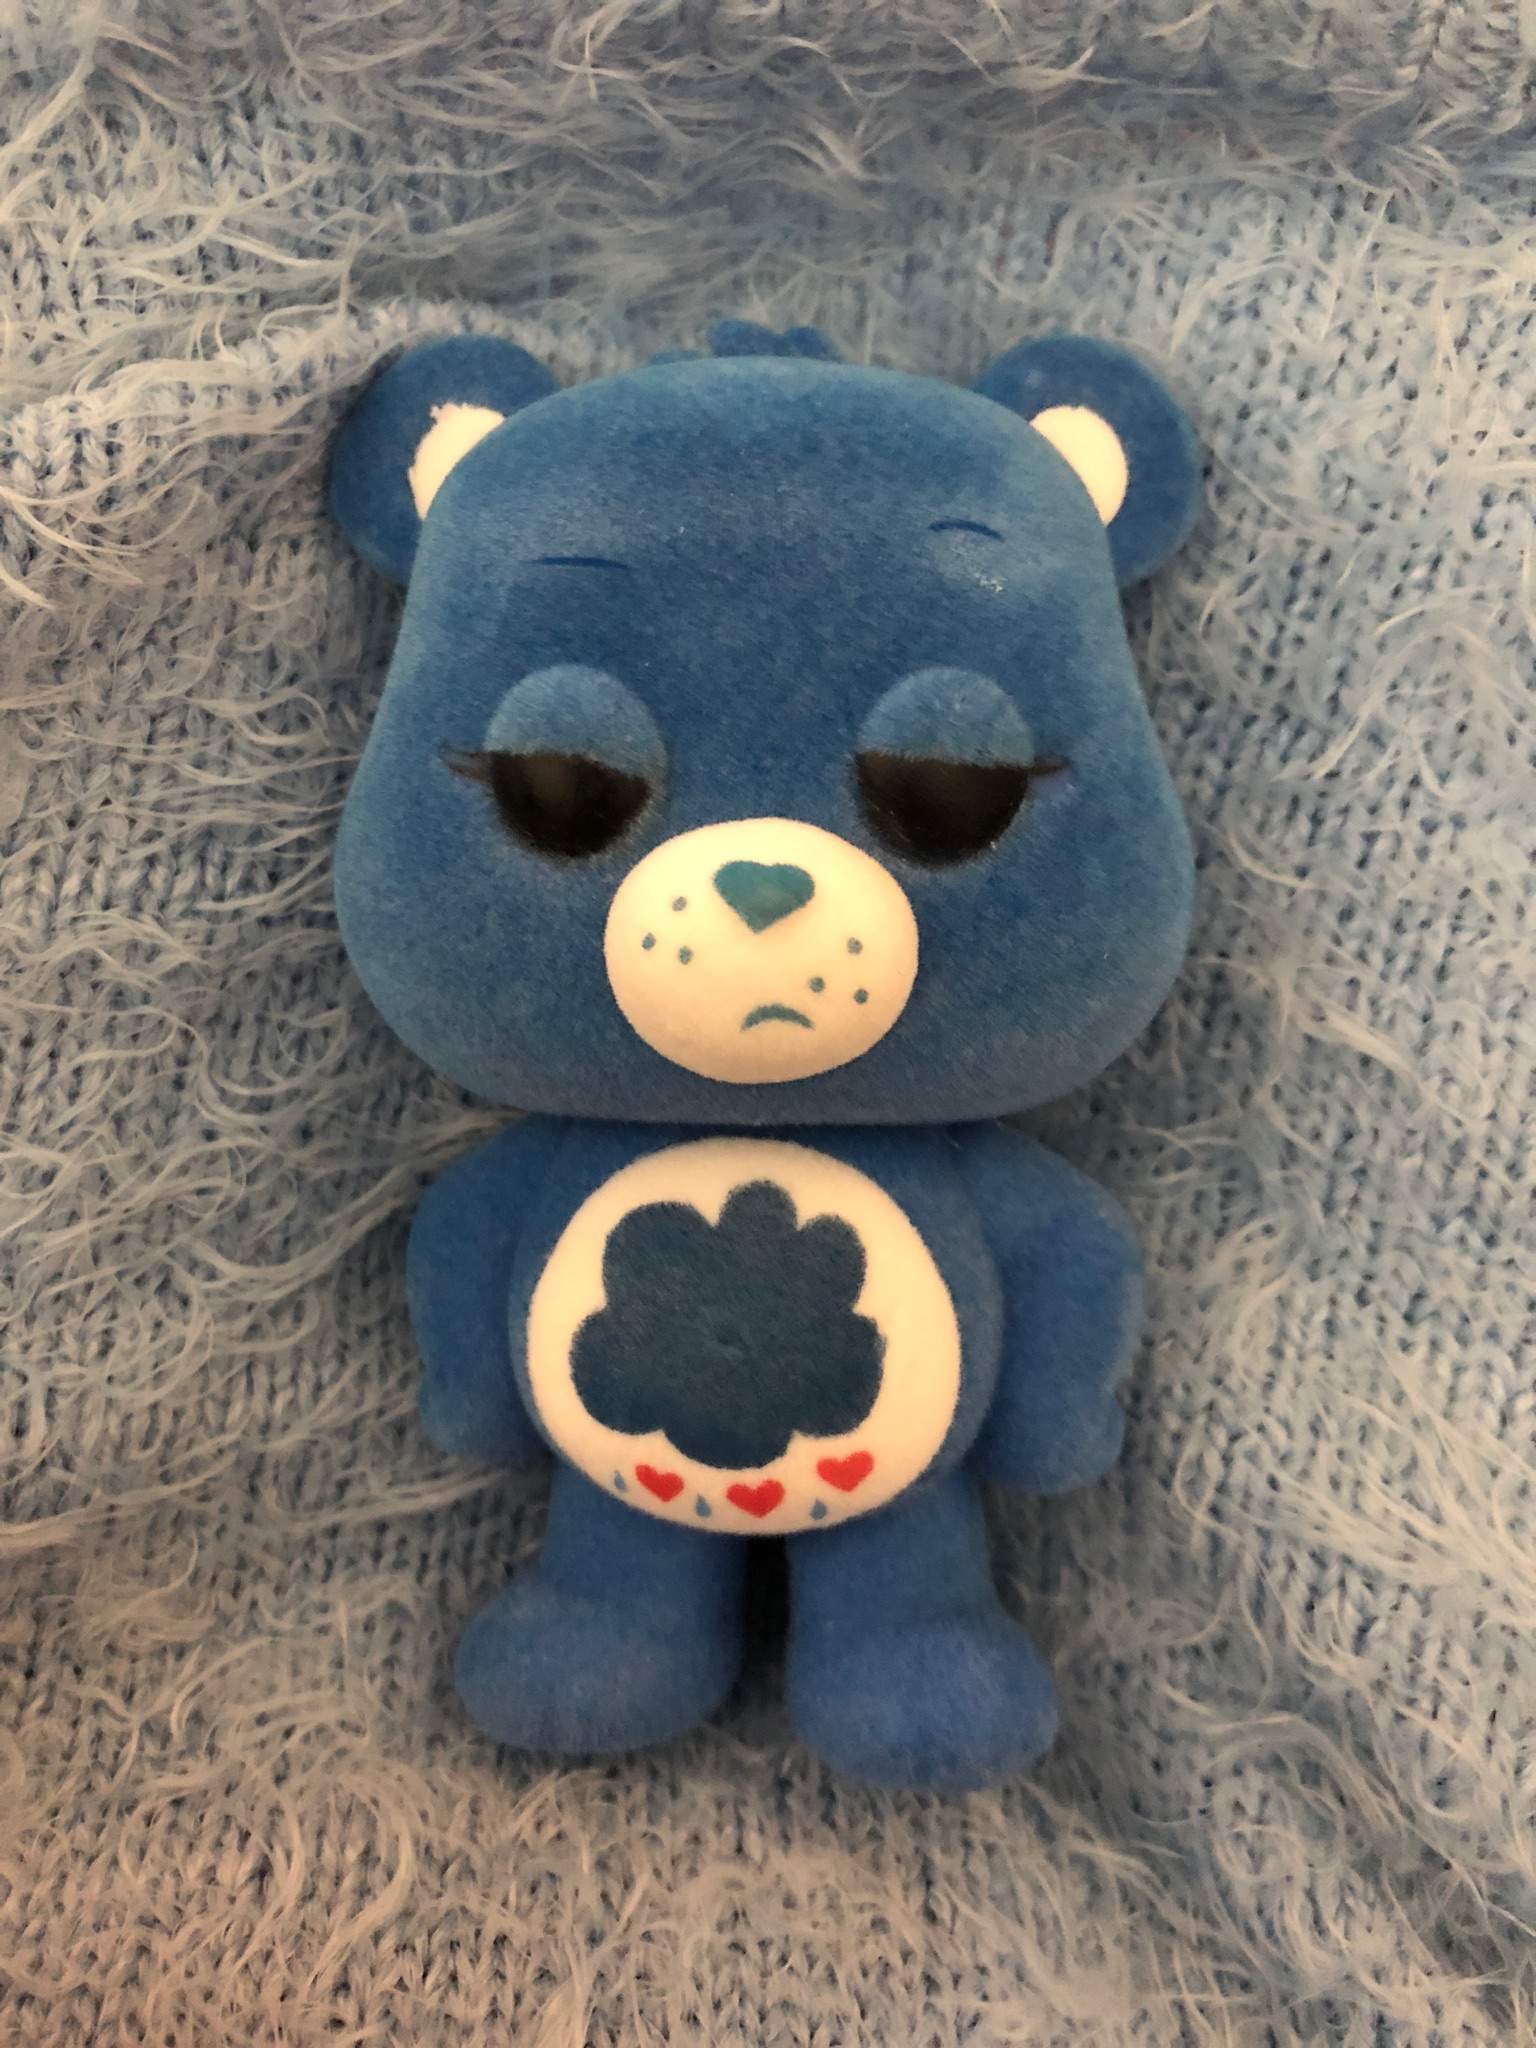 funko pop grumpy bear